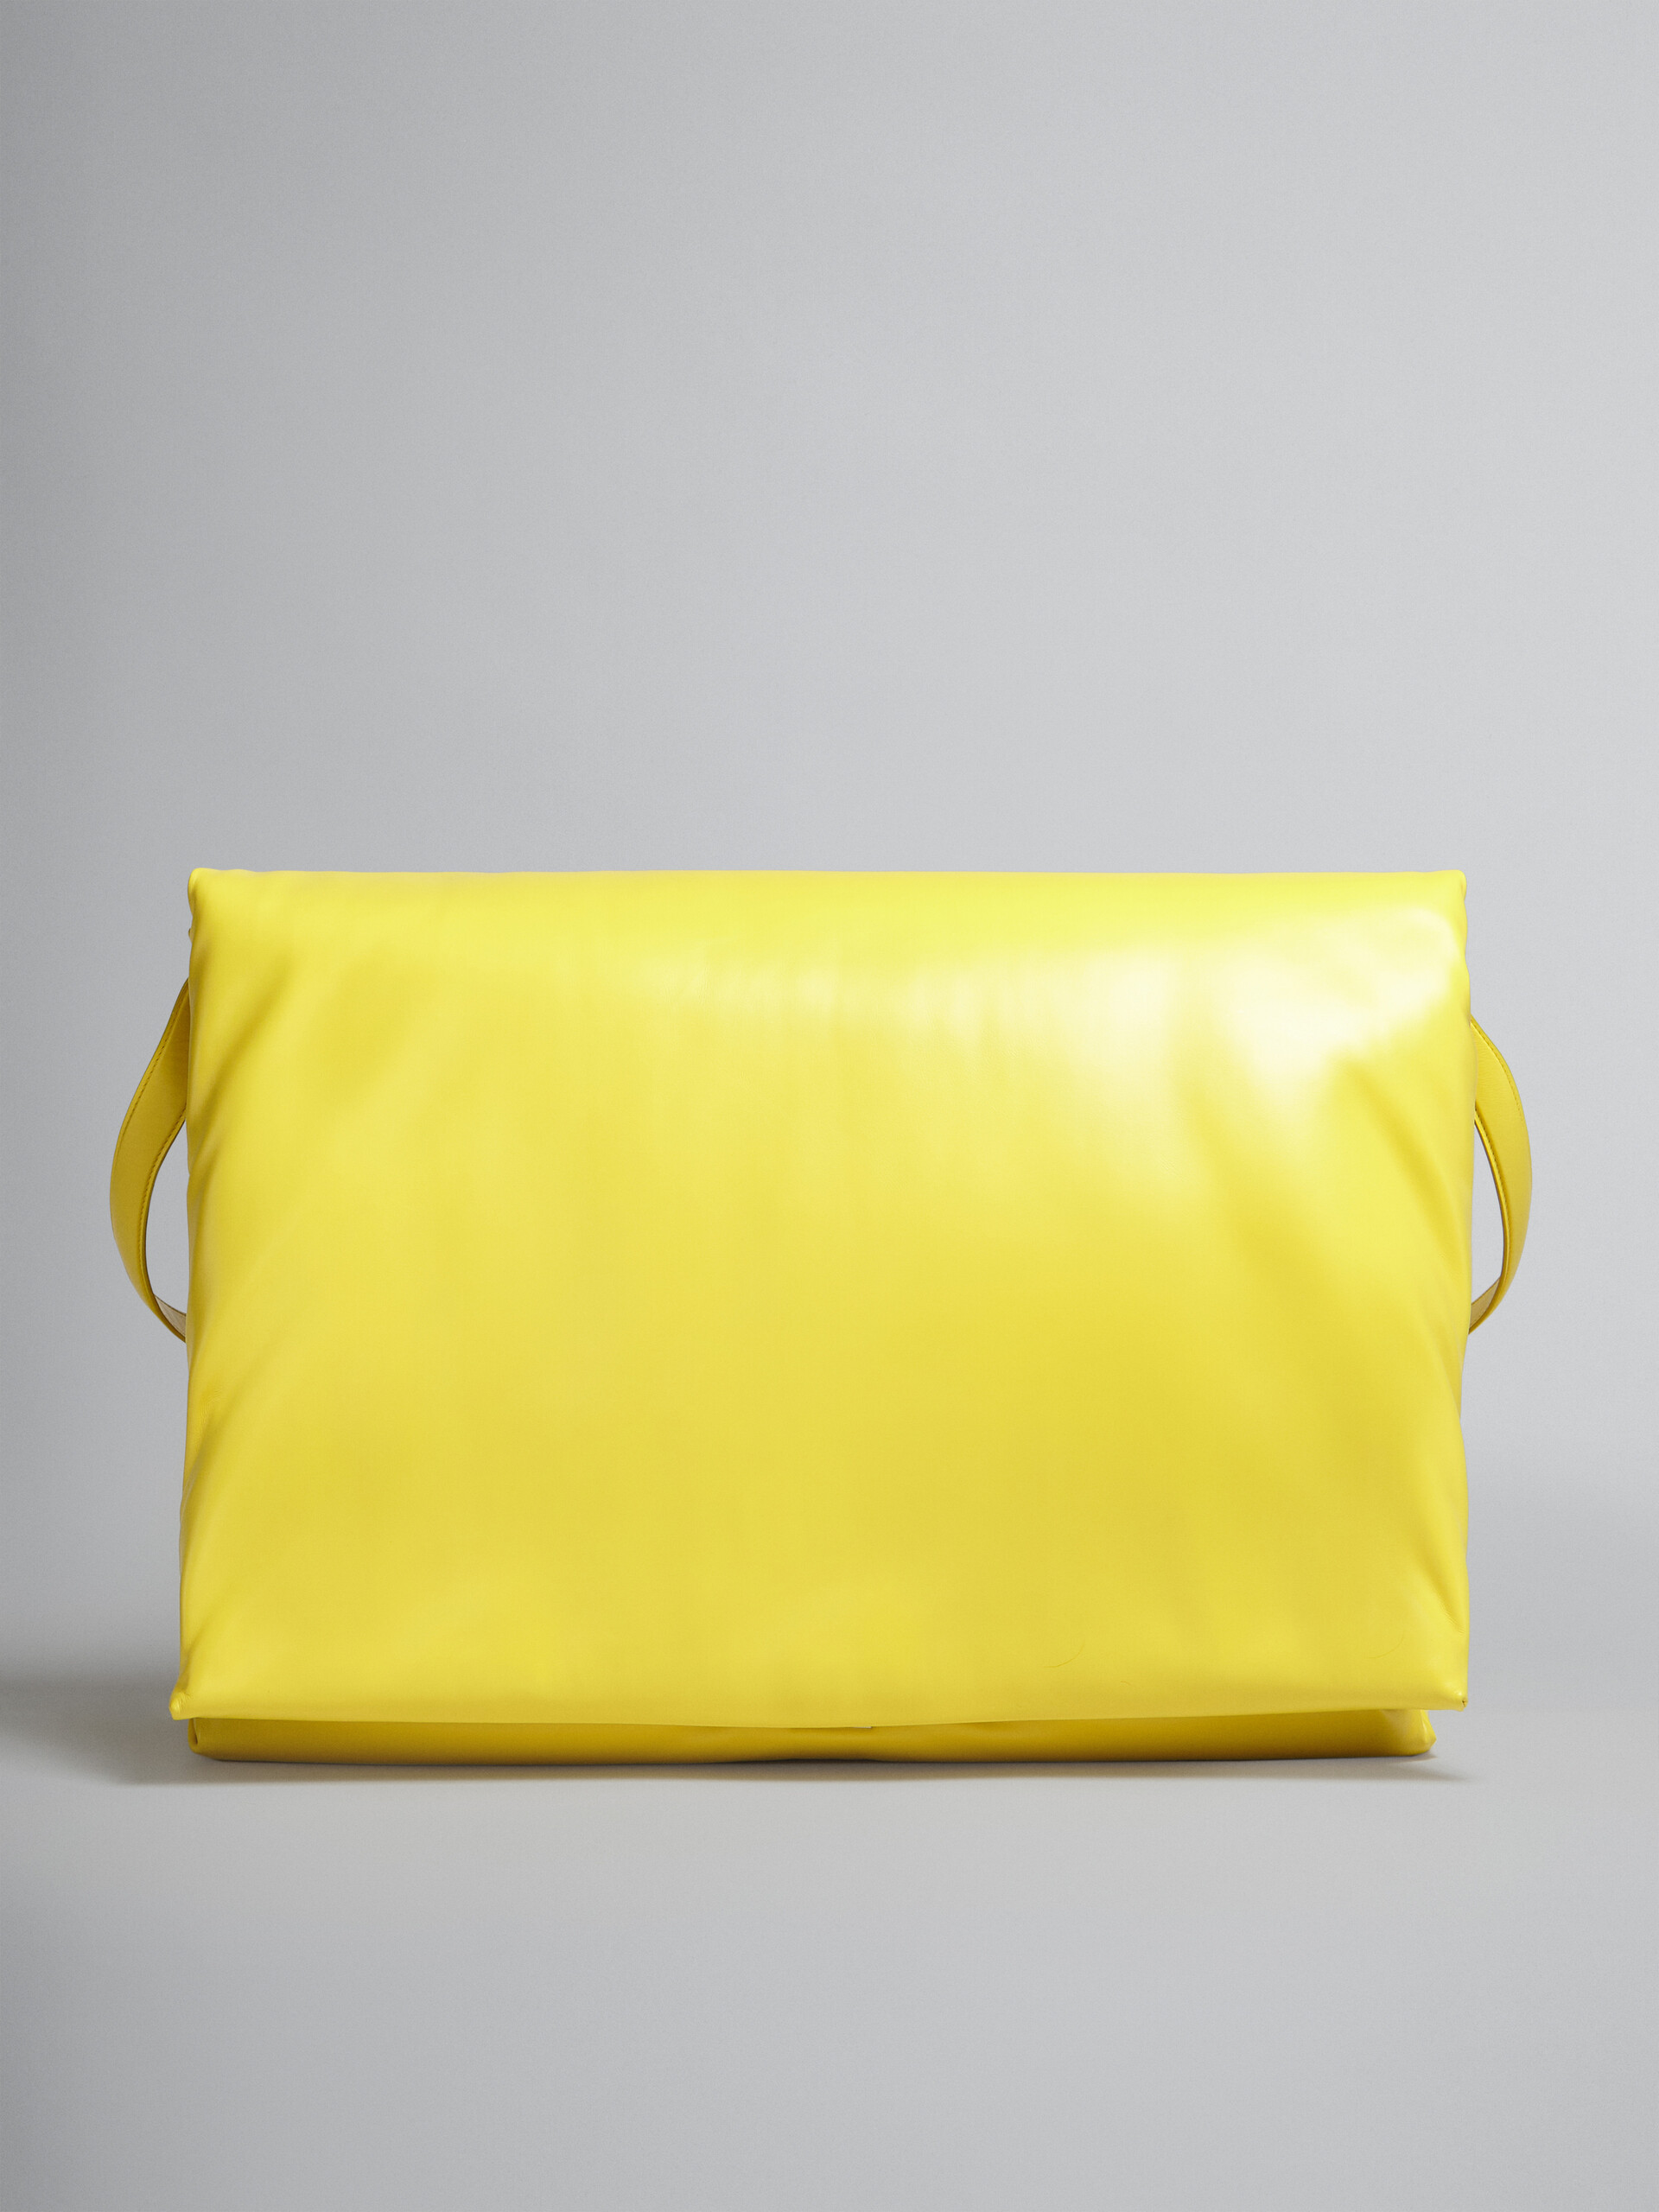 Maxi yellow calsfkin Prisma bag - Shoulder Bag - Image 1